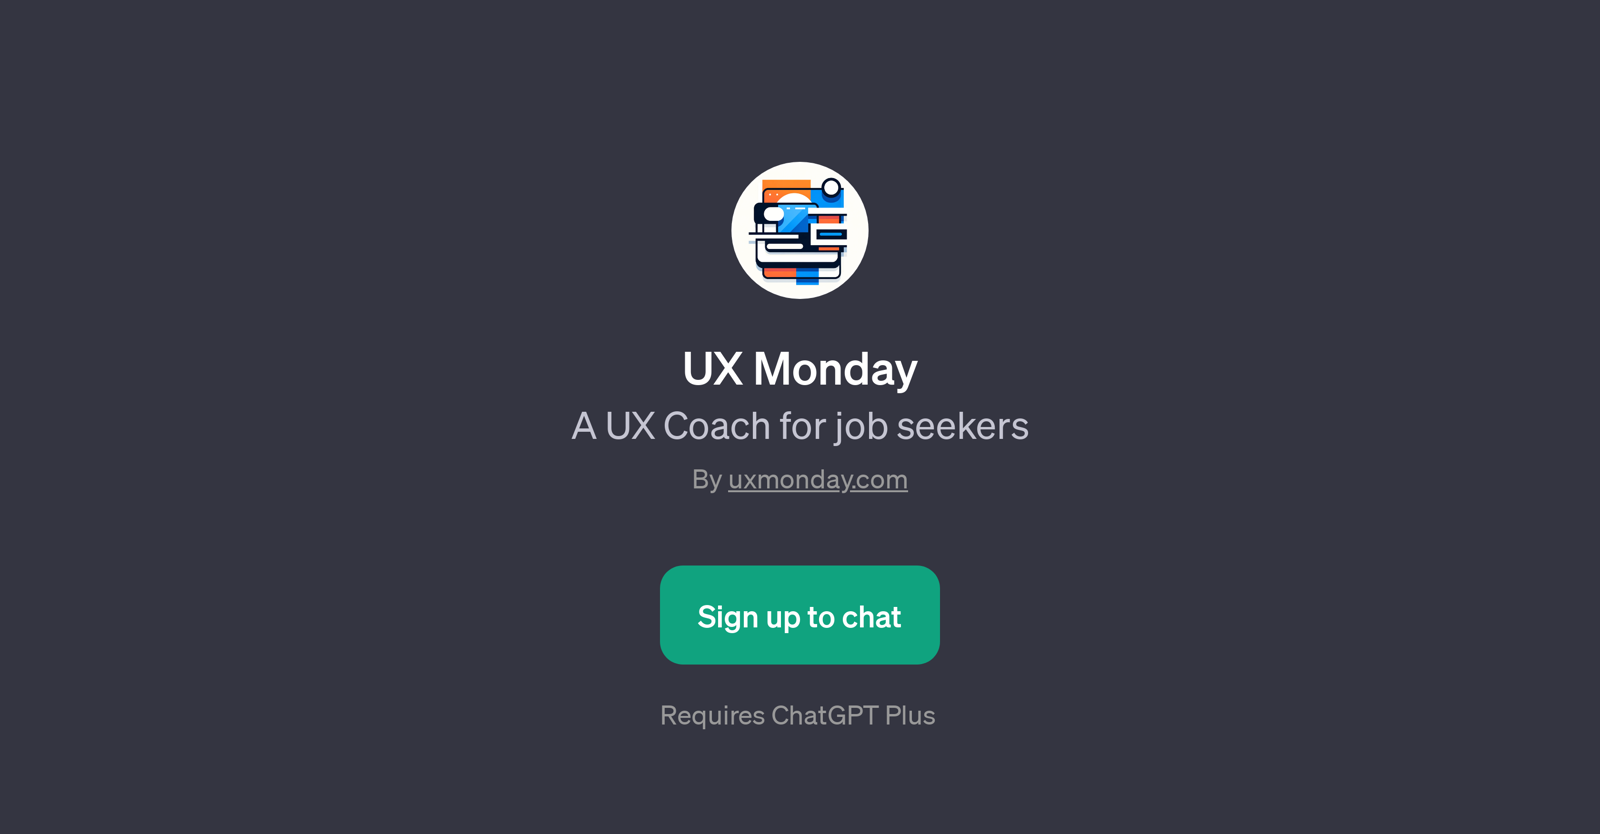 UX Monday website